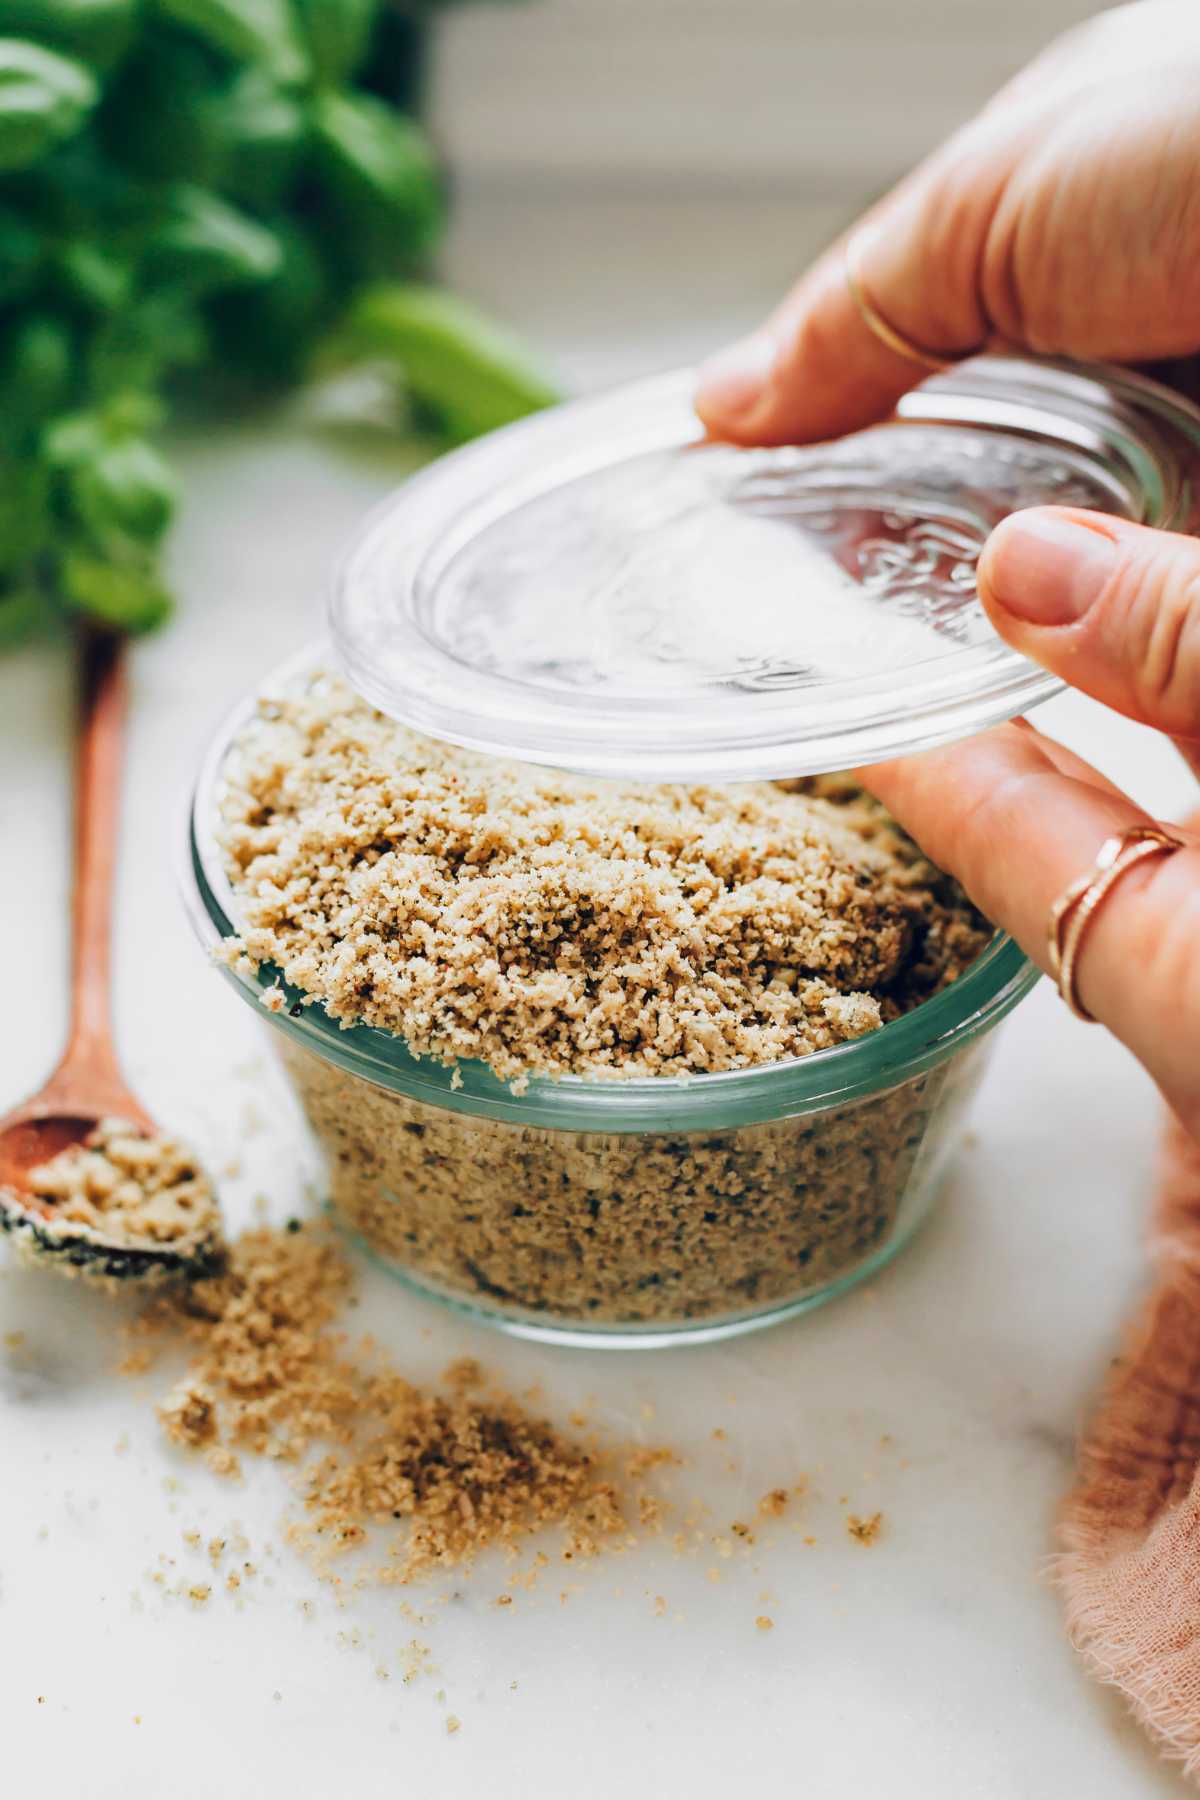 Storing Vegan Parmesan in a glass Jar